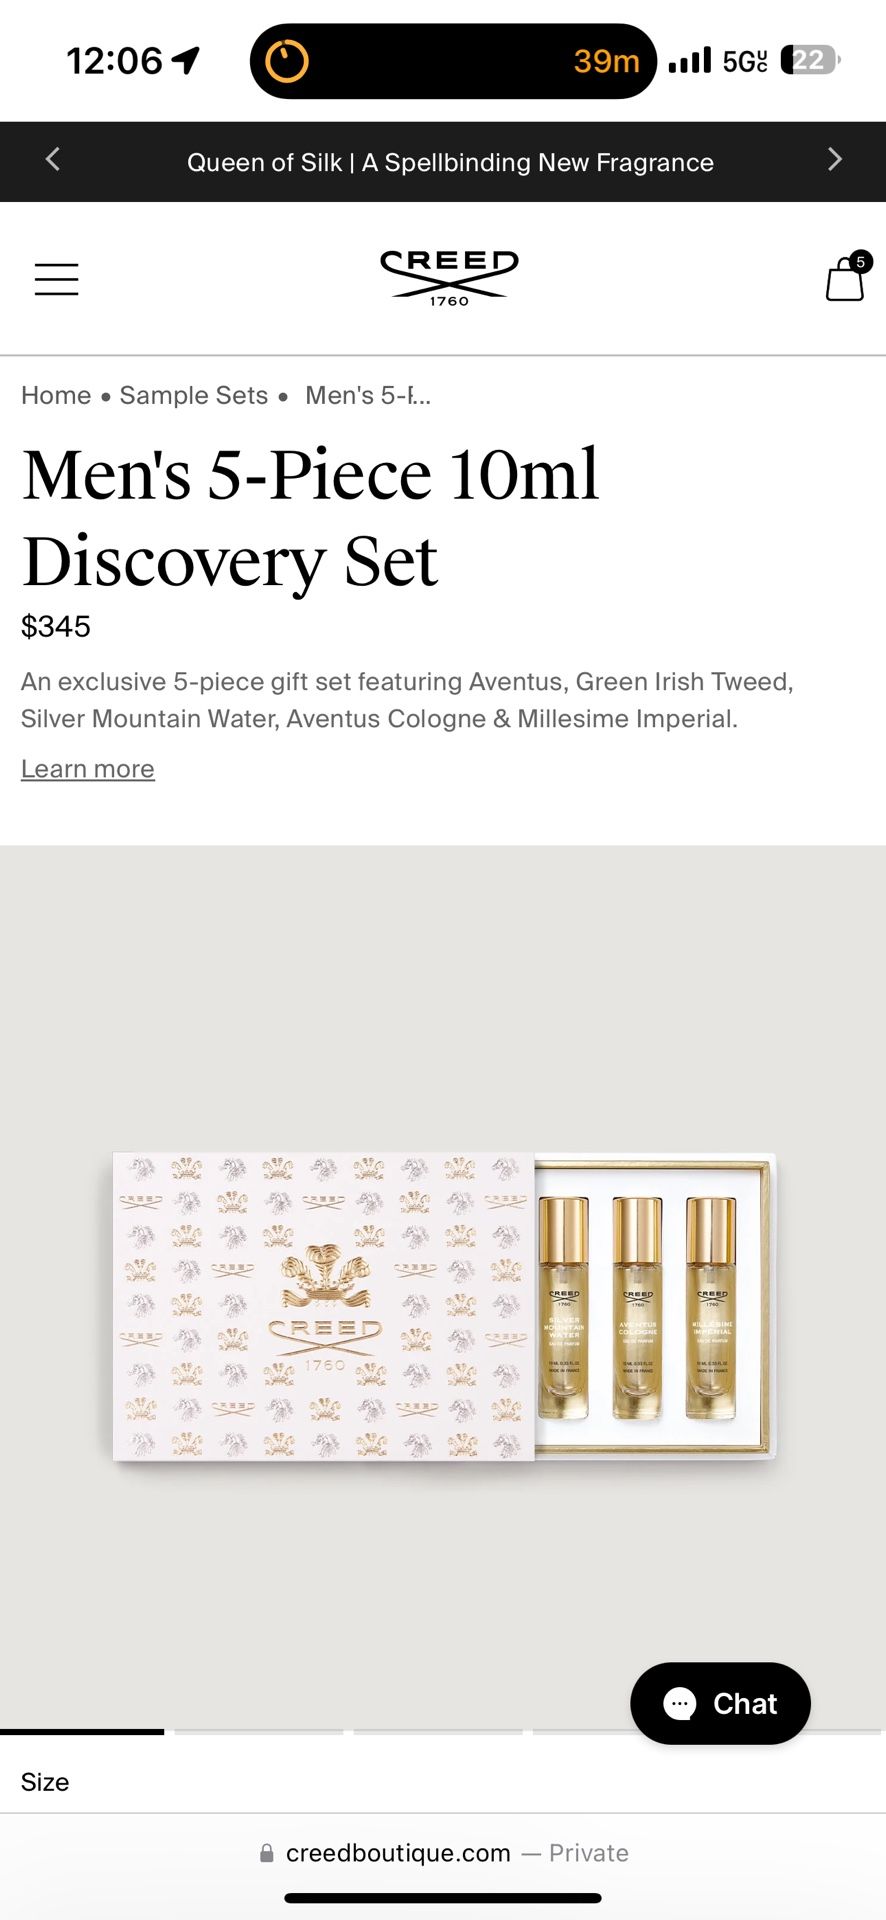 Creed Adventus Discovery kit